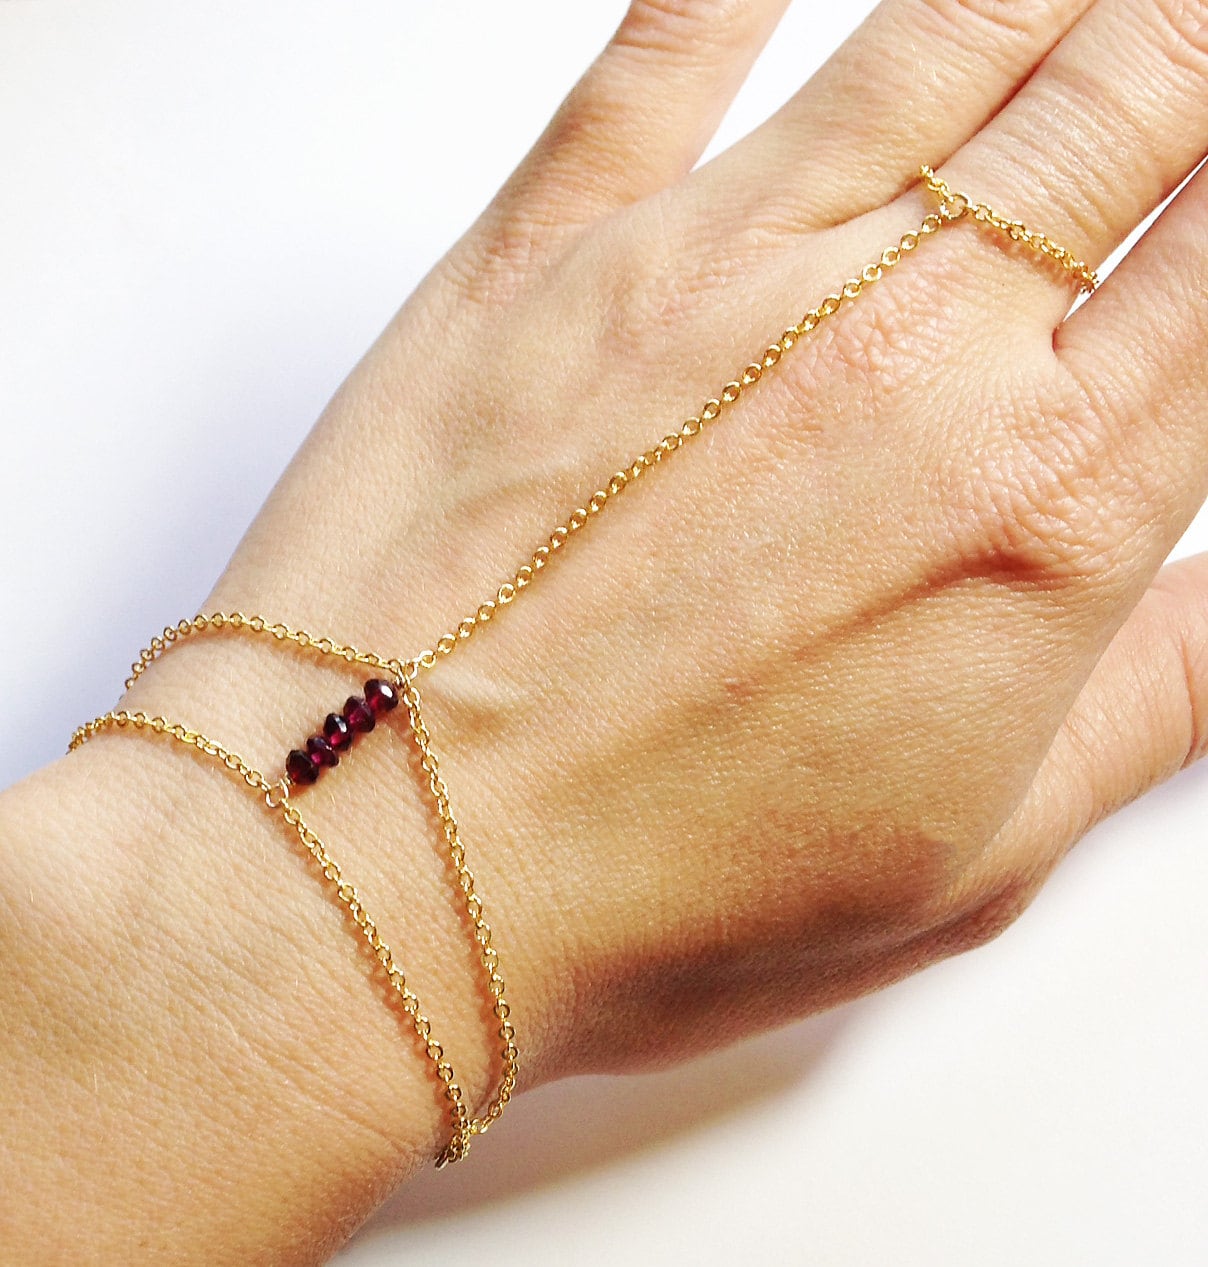 Garnet Hand Chain - Garnet Slave Bracelet - Garnet and Gold Slave Bracelet